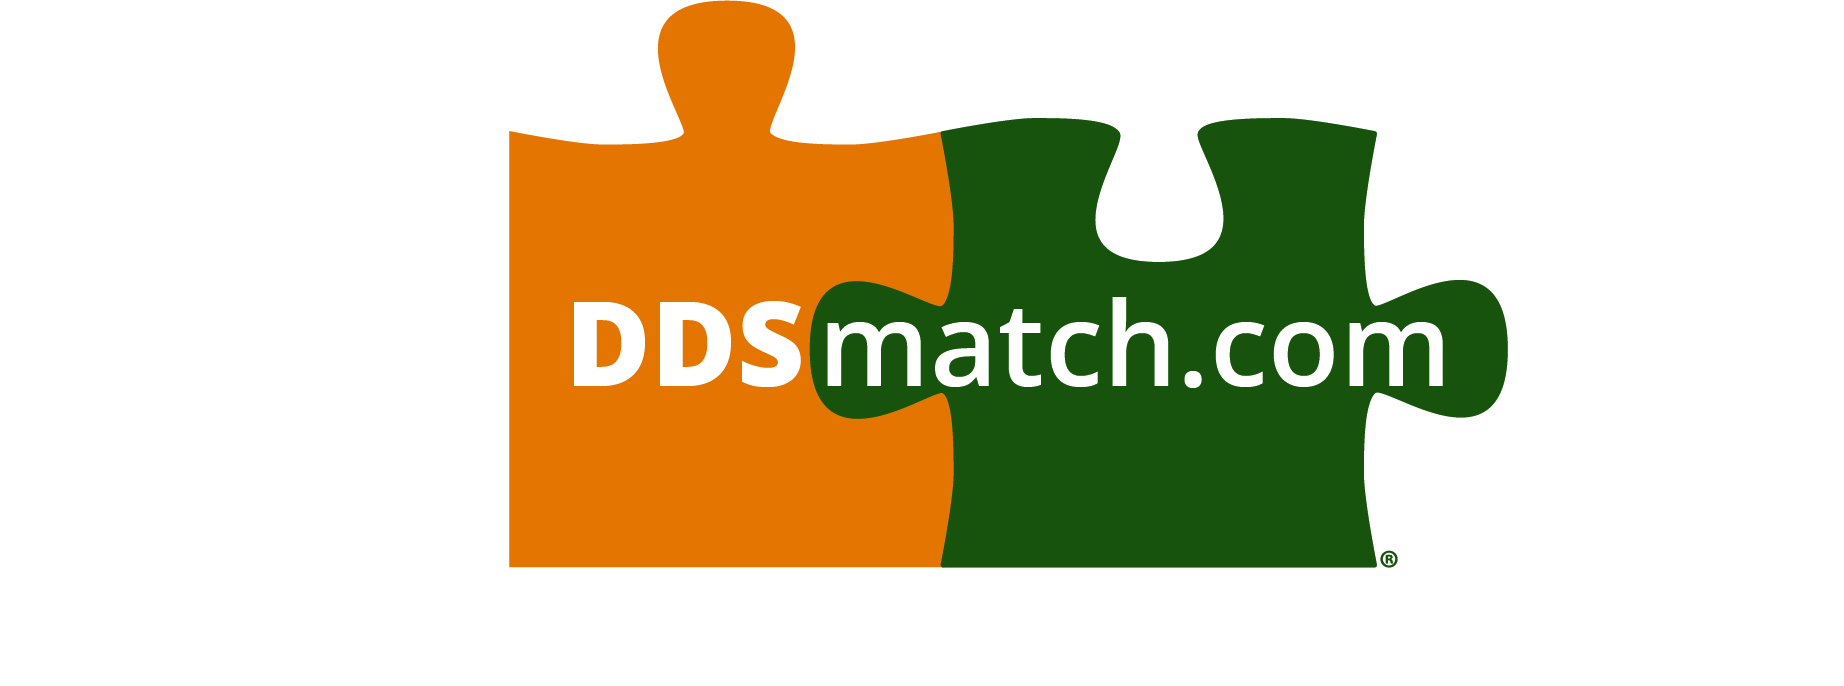 ddsmatch.com - Roy Fruehauf Logo